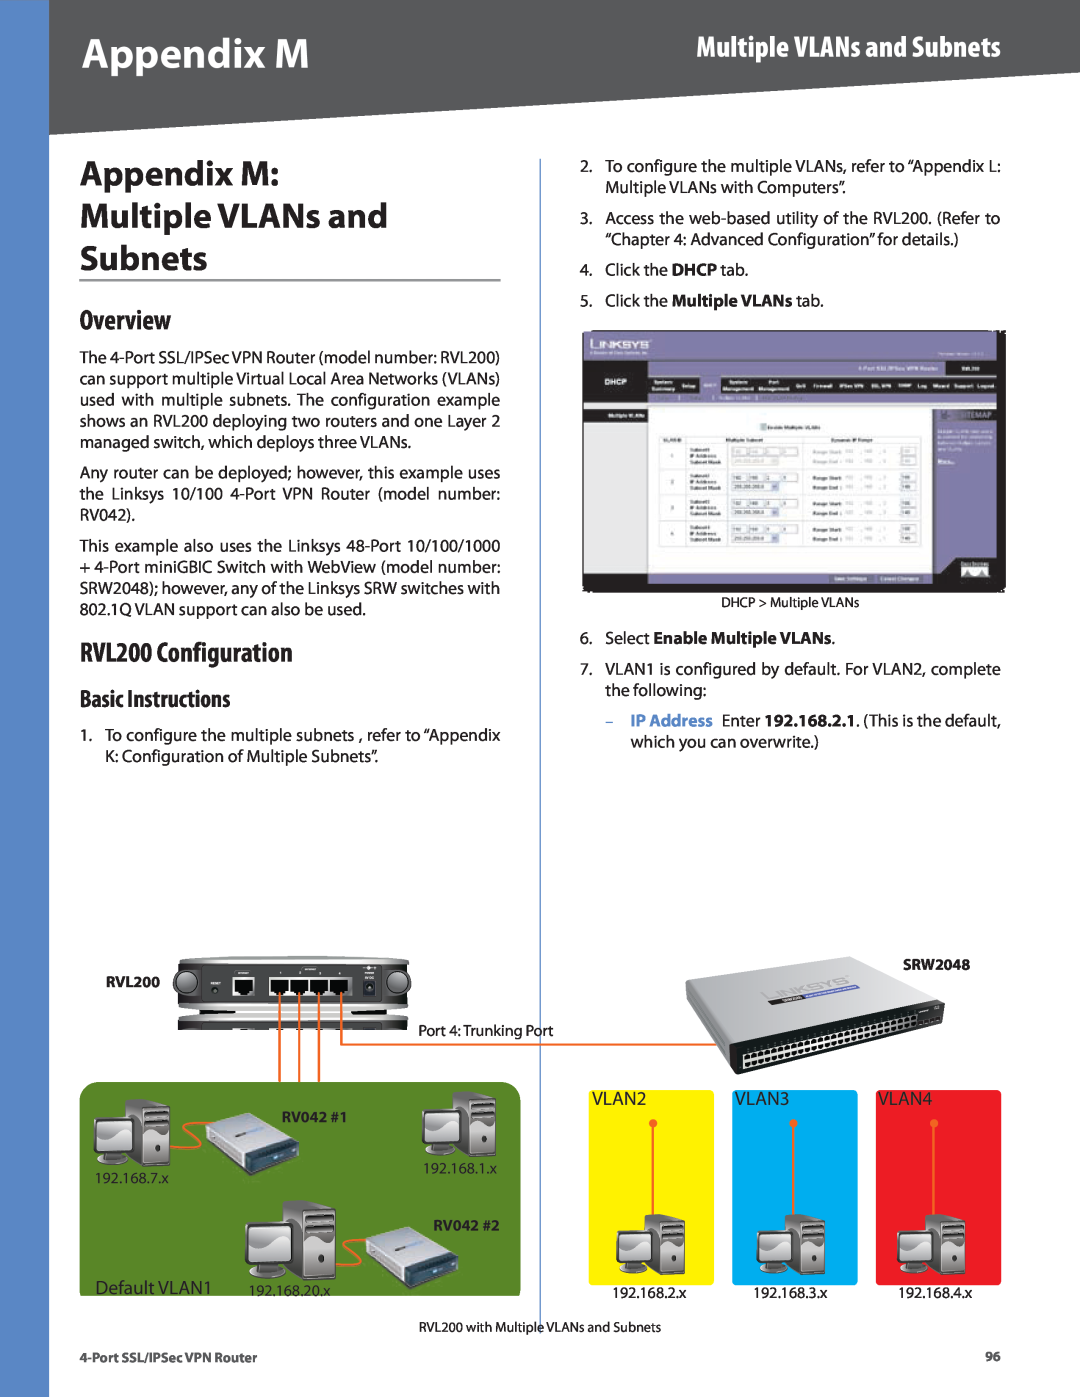 Cisco Systems manual Appendix M, RVL200 Configuration, Basic Instructions, Multiple VLANs and Subnets, VLAN2, VLAN3 